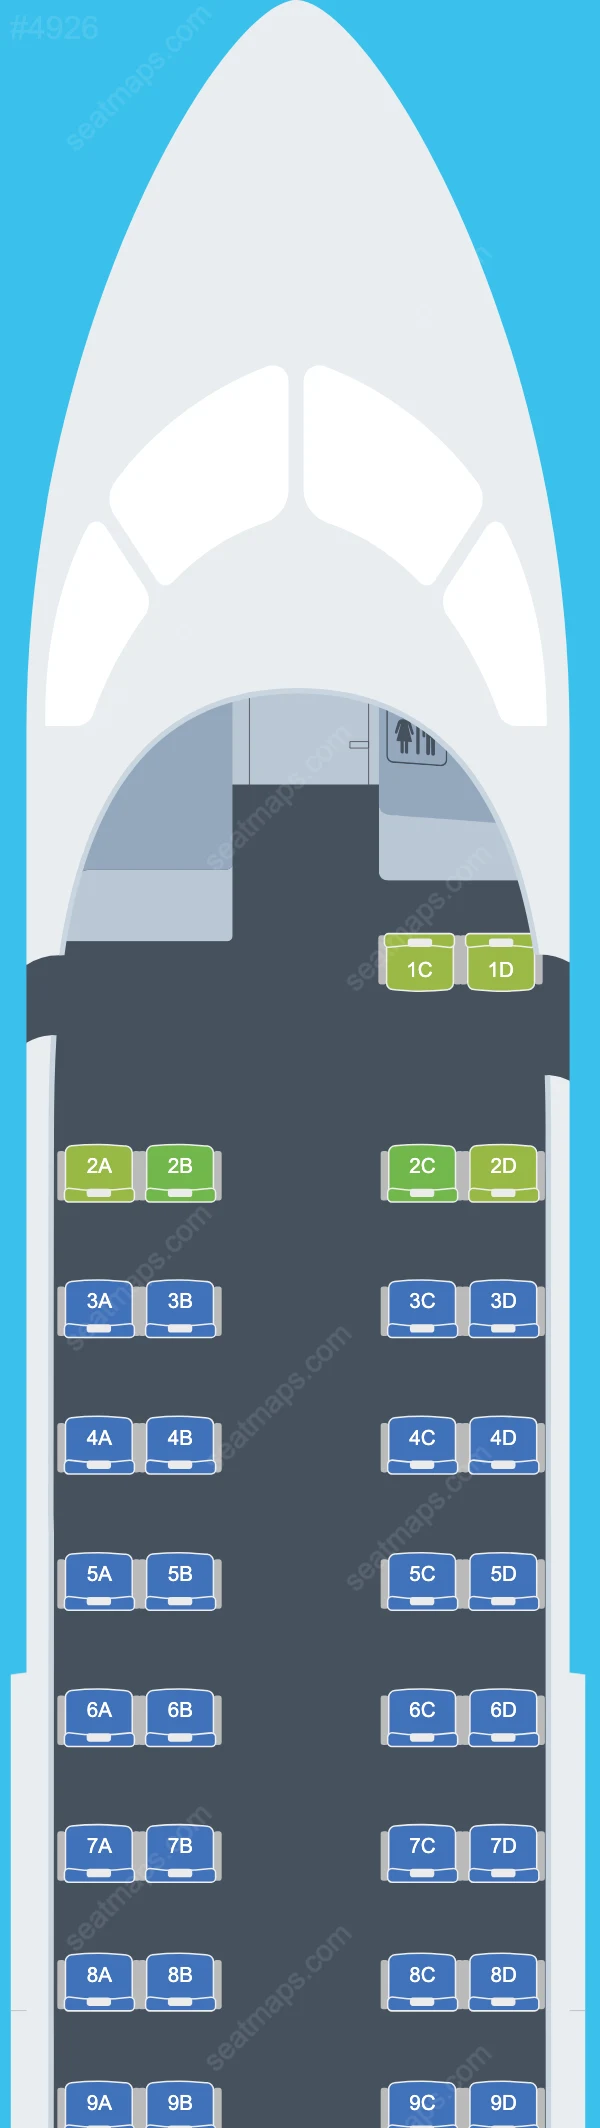 Central Mountain Air Bombardier Q300 Seat Maps Q300